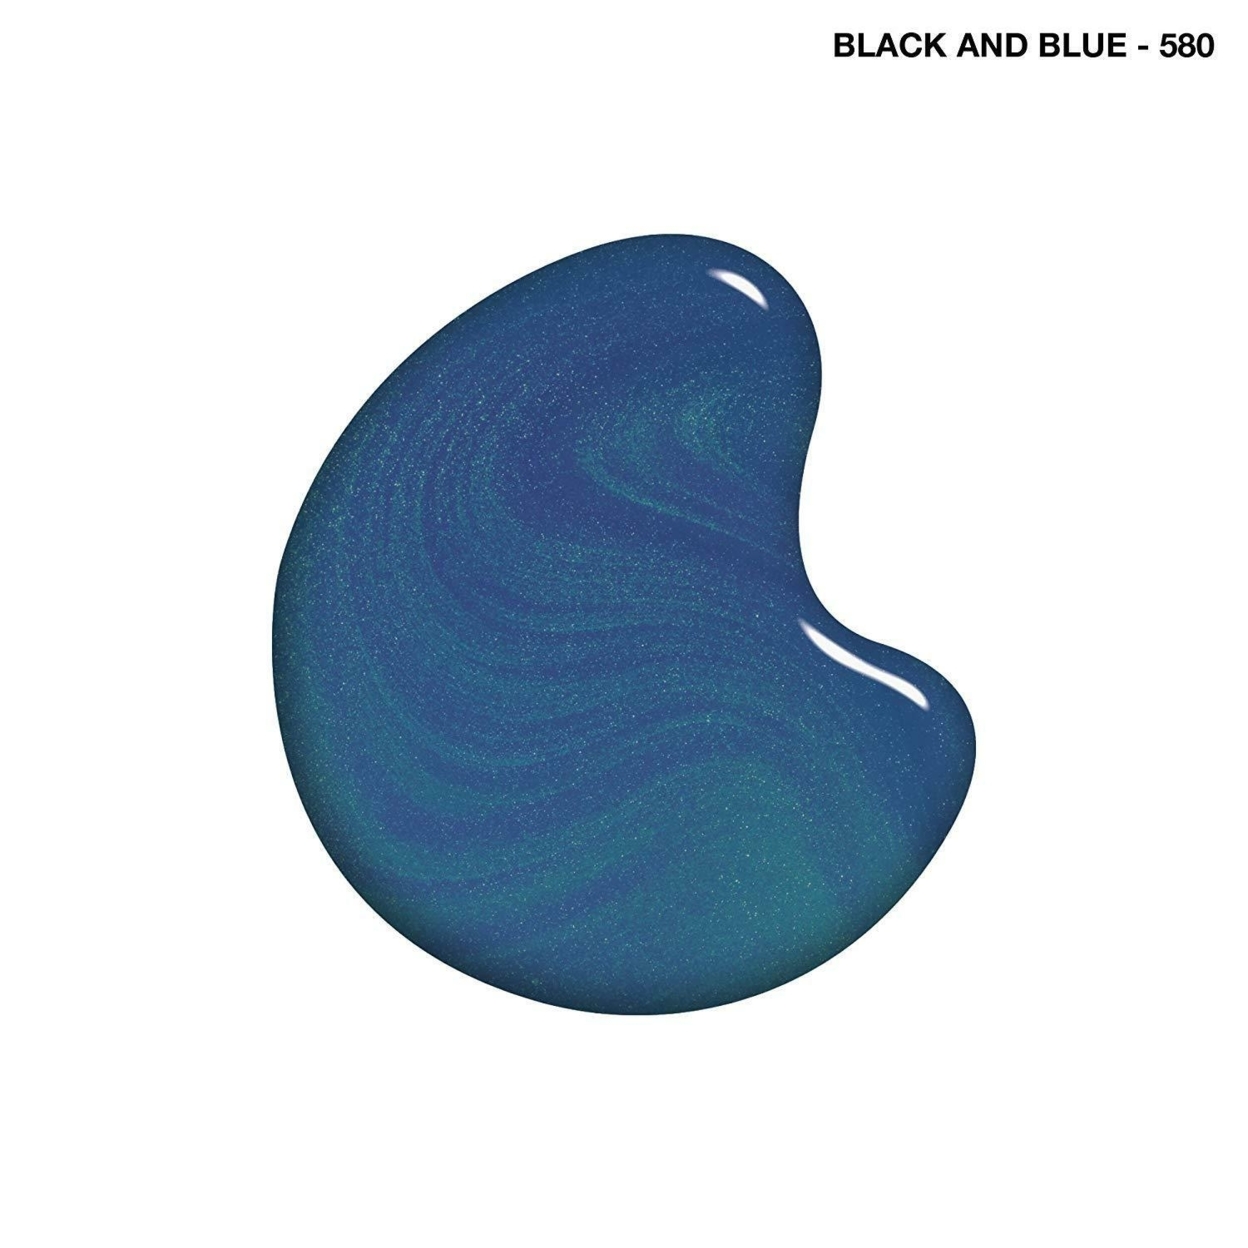 Sally Hansen Complete Salon Manicure - 581 Black and Blue 0.5 oz Nail Polish - image 4 of 4